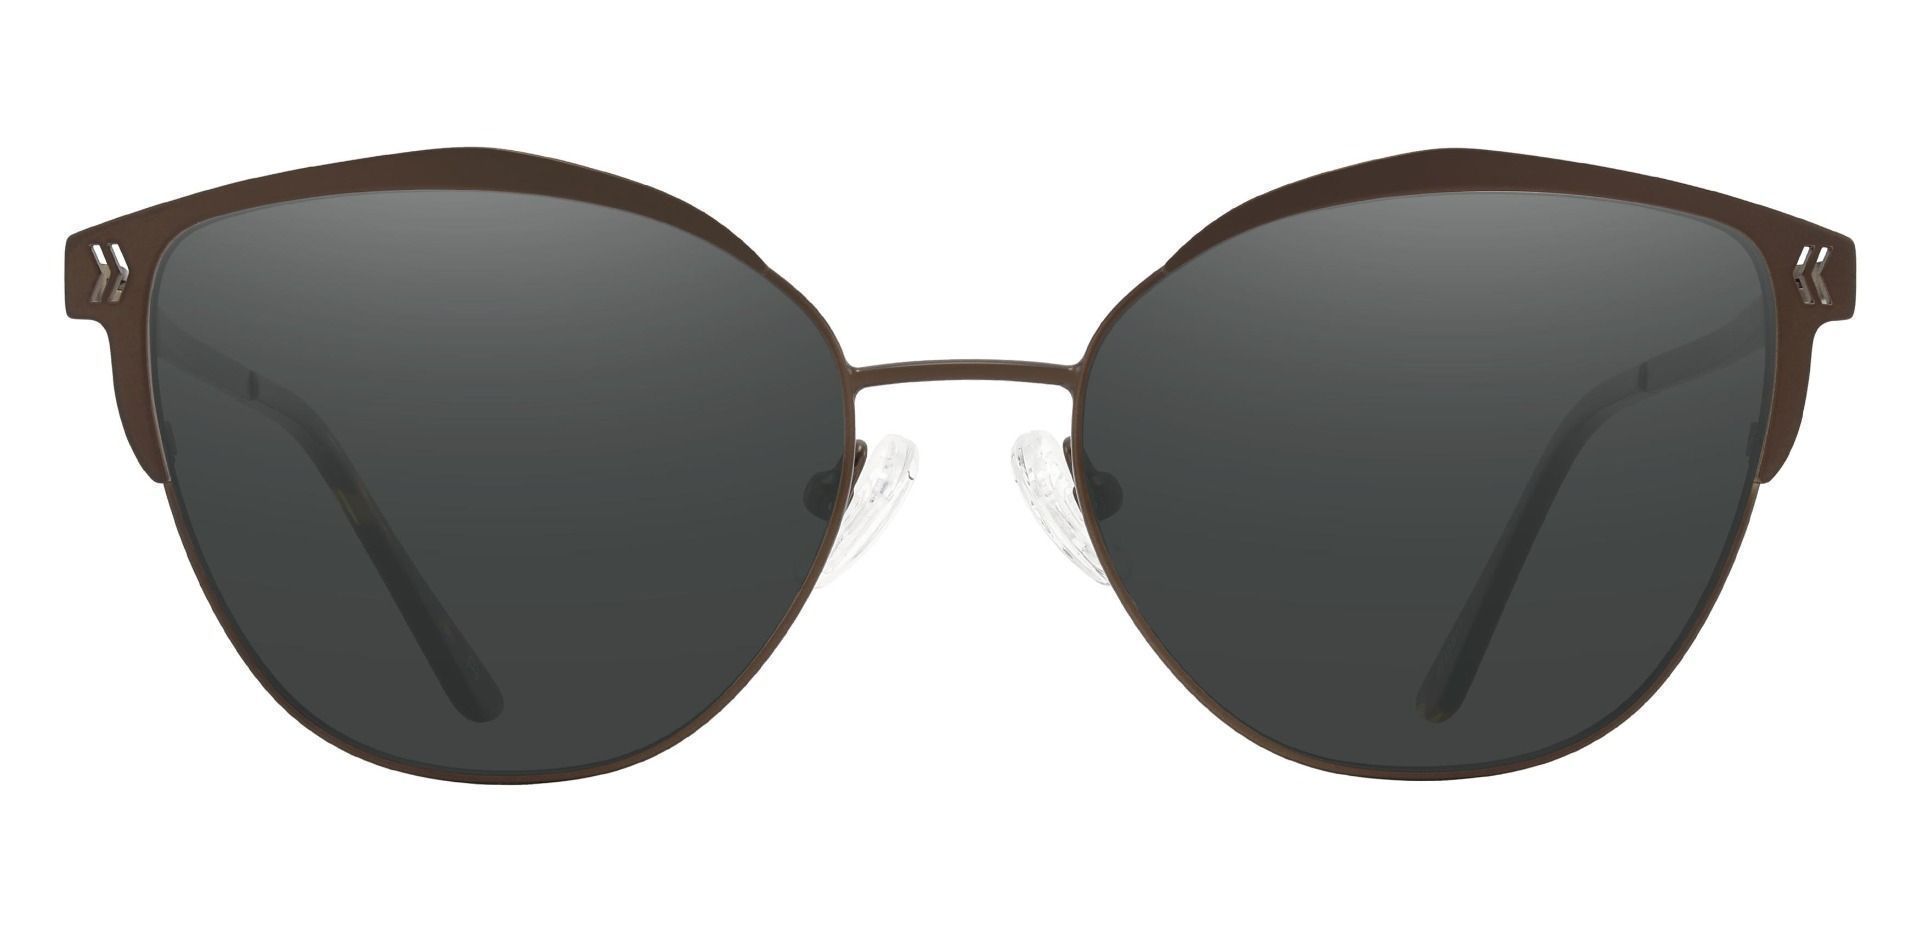 Hampton Geometric Prescription Sunglasses - Brown Frame With Gray Lenses